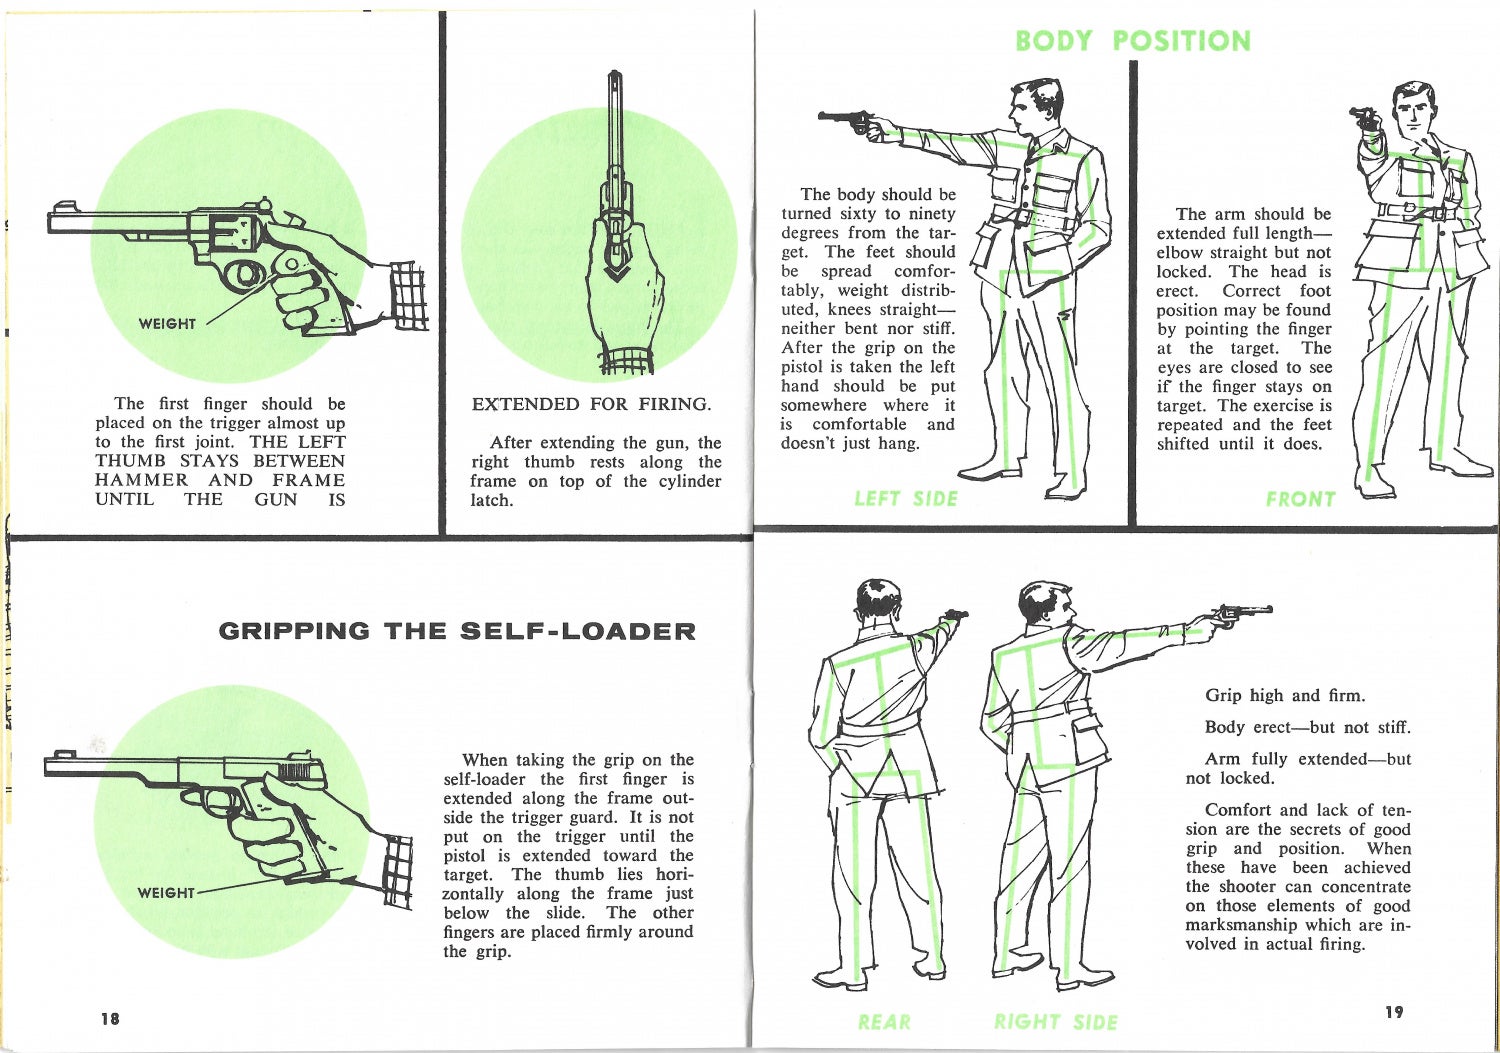 1959 pistol shooting position